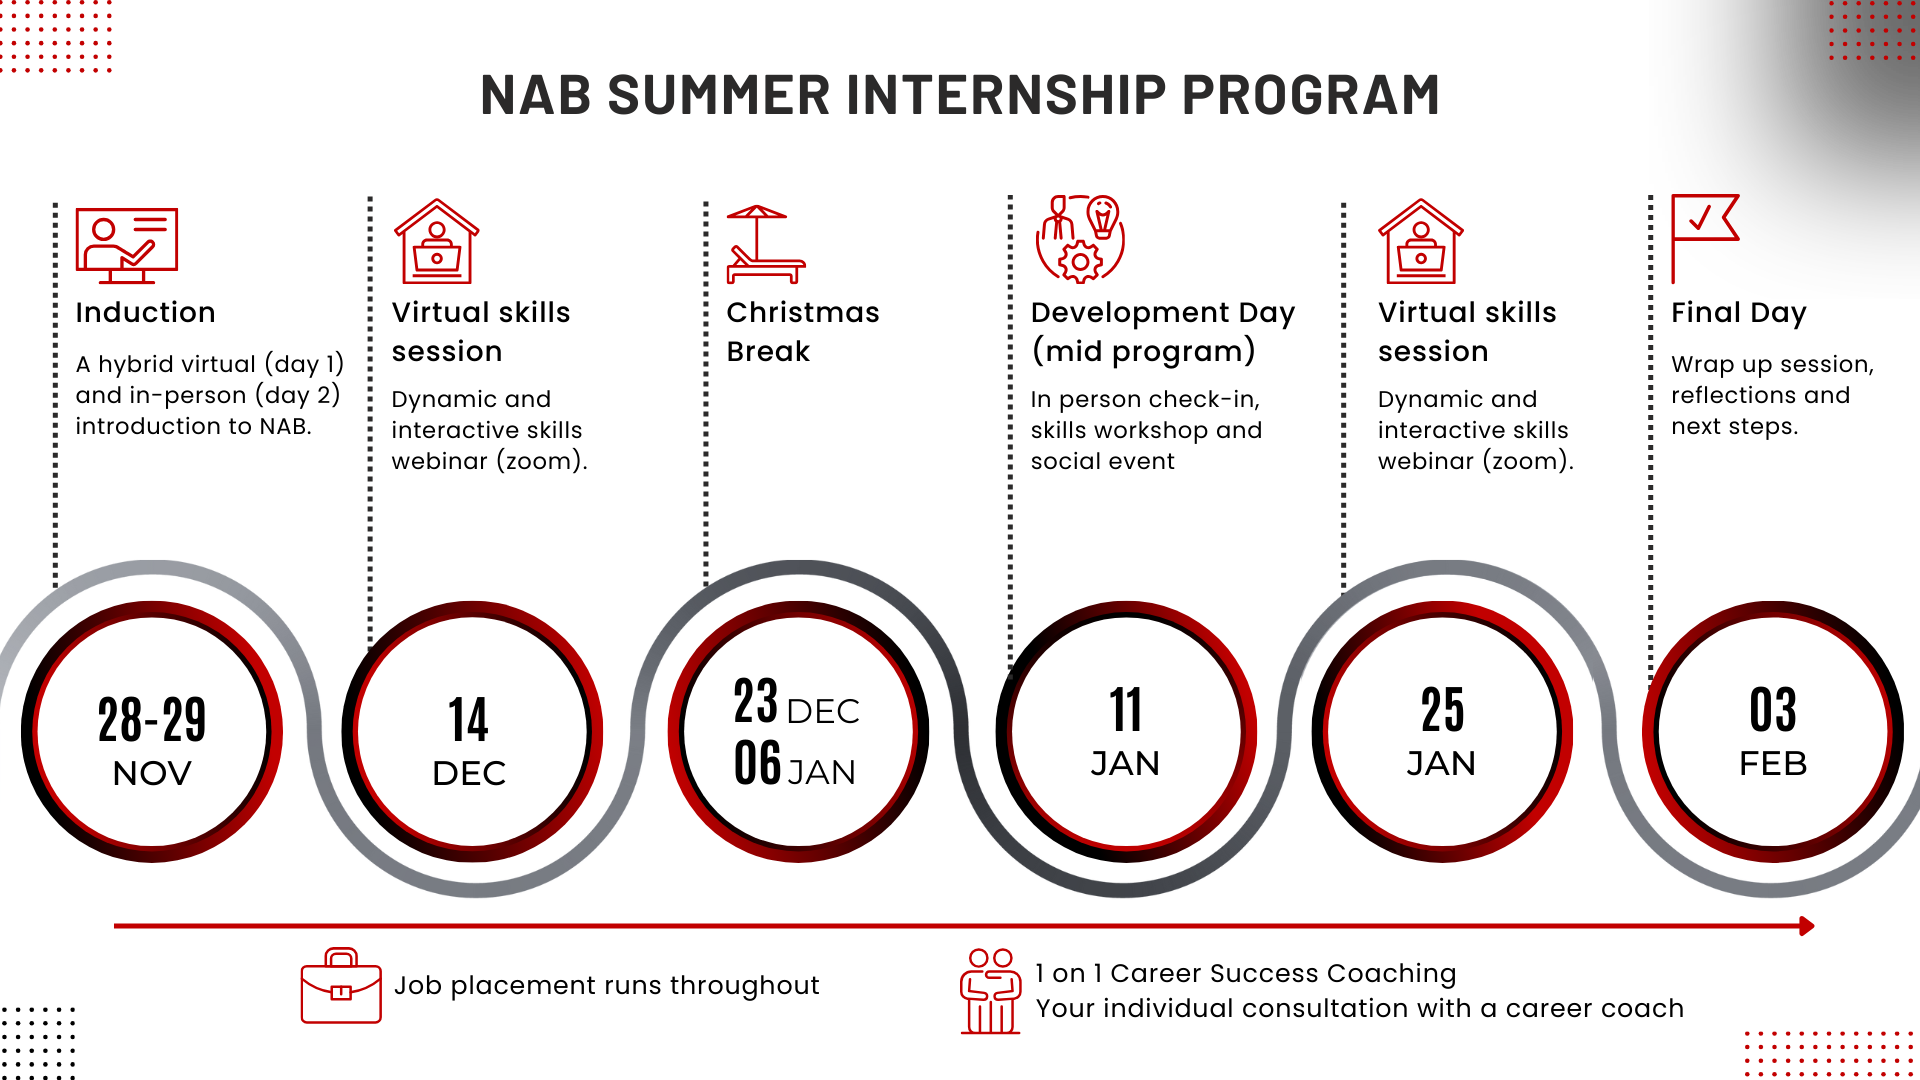 Image of NAB's summer internship program stages.